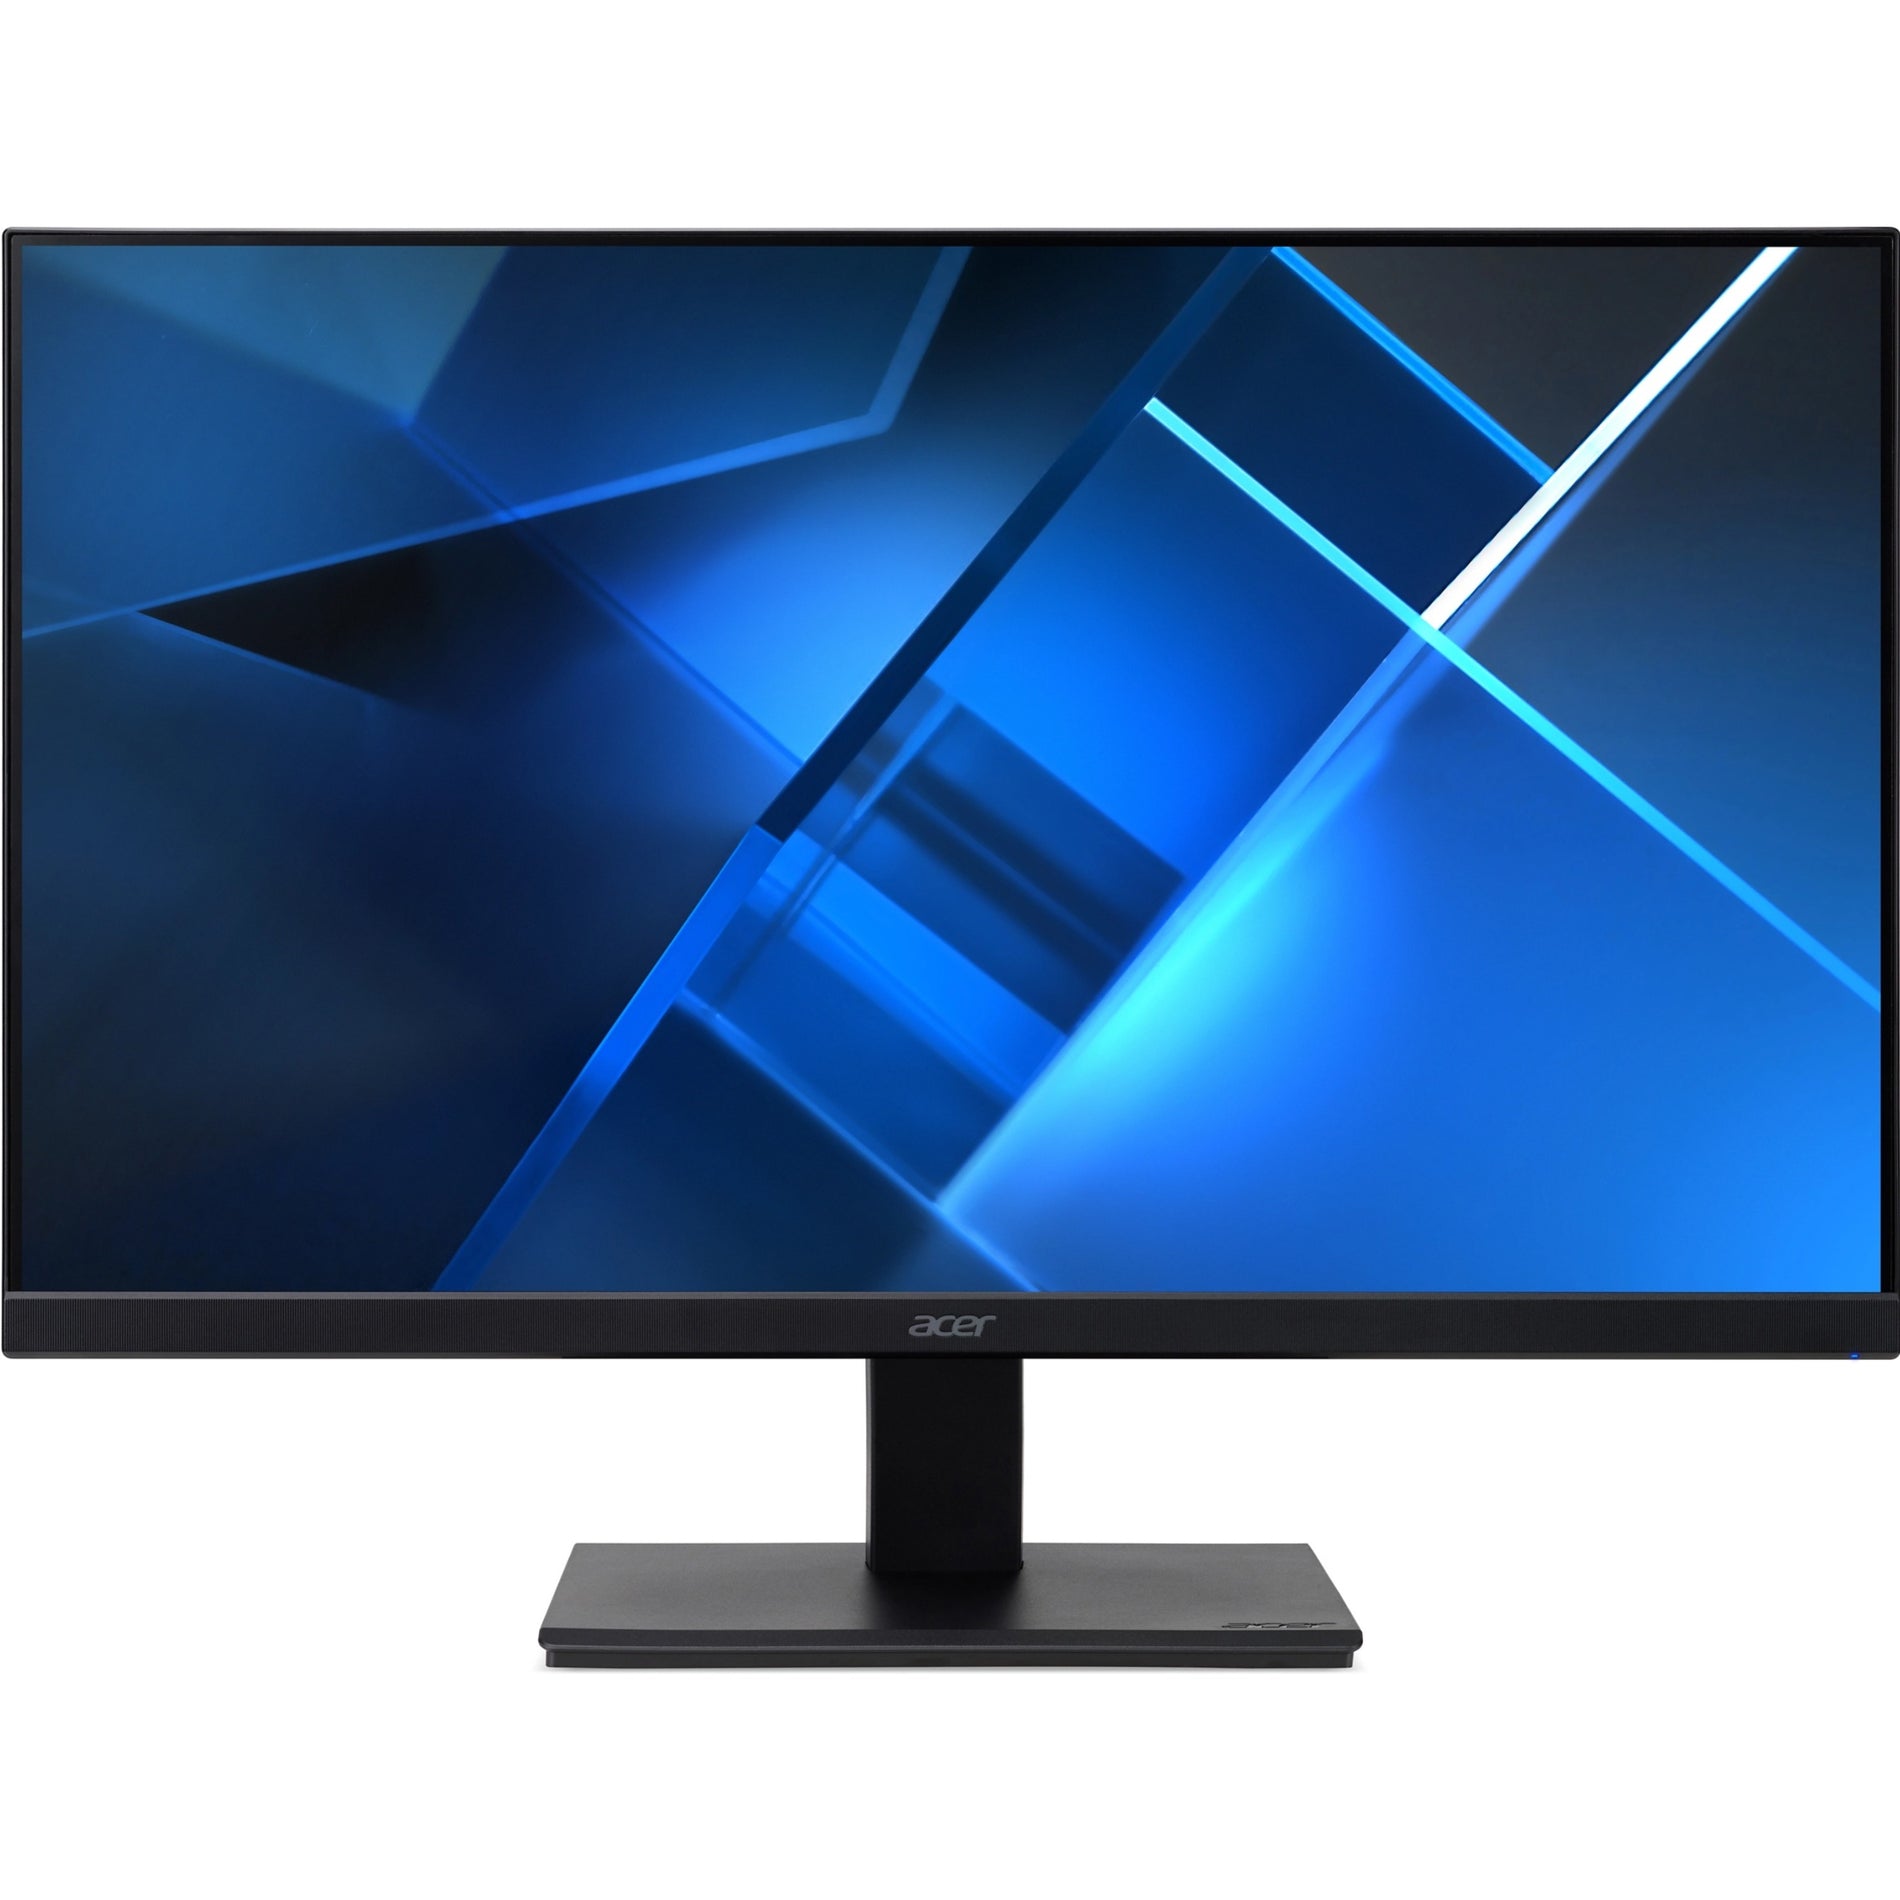 Acer UM.WV7AA.H02 V227Q H Widescreen LCD Monitor, 21.5" Full HD, 4ms GTG, FreeSync, Black